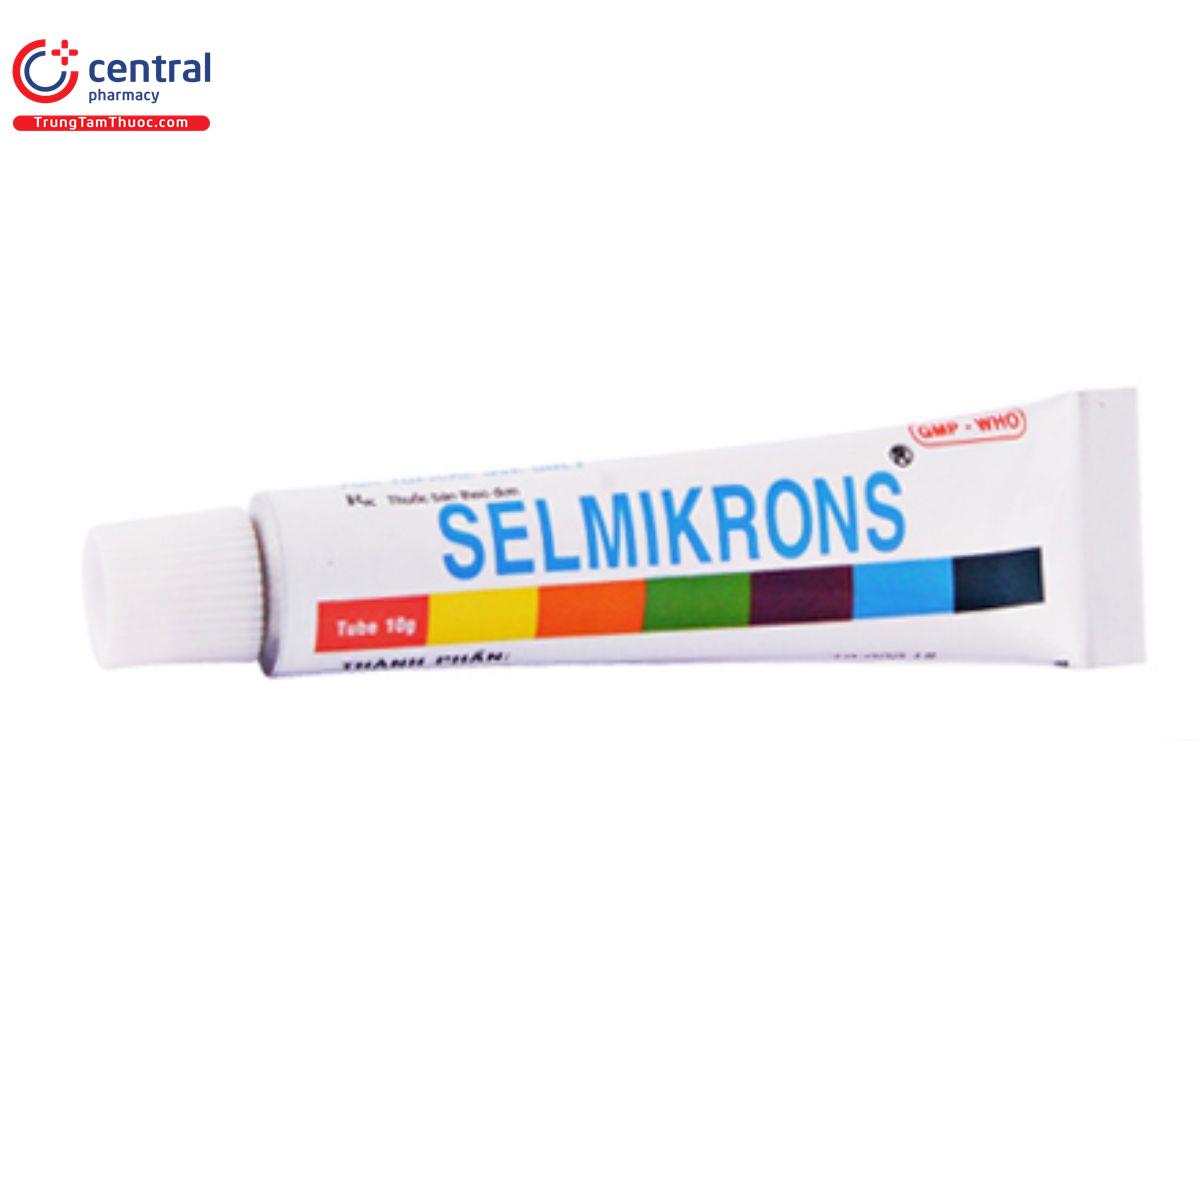 thuoc selmikrons 2 I3478